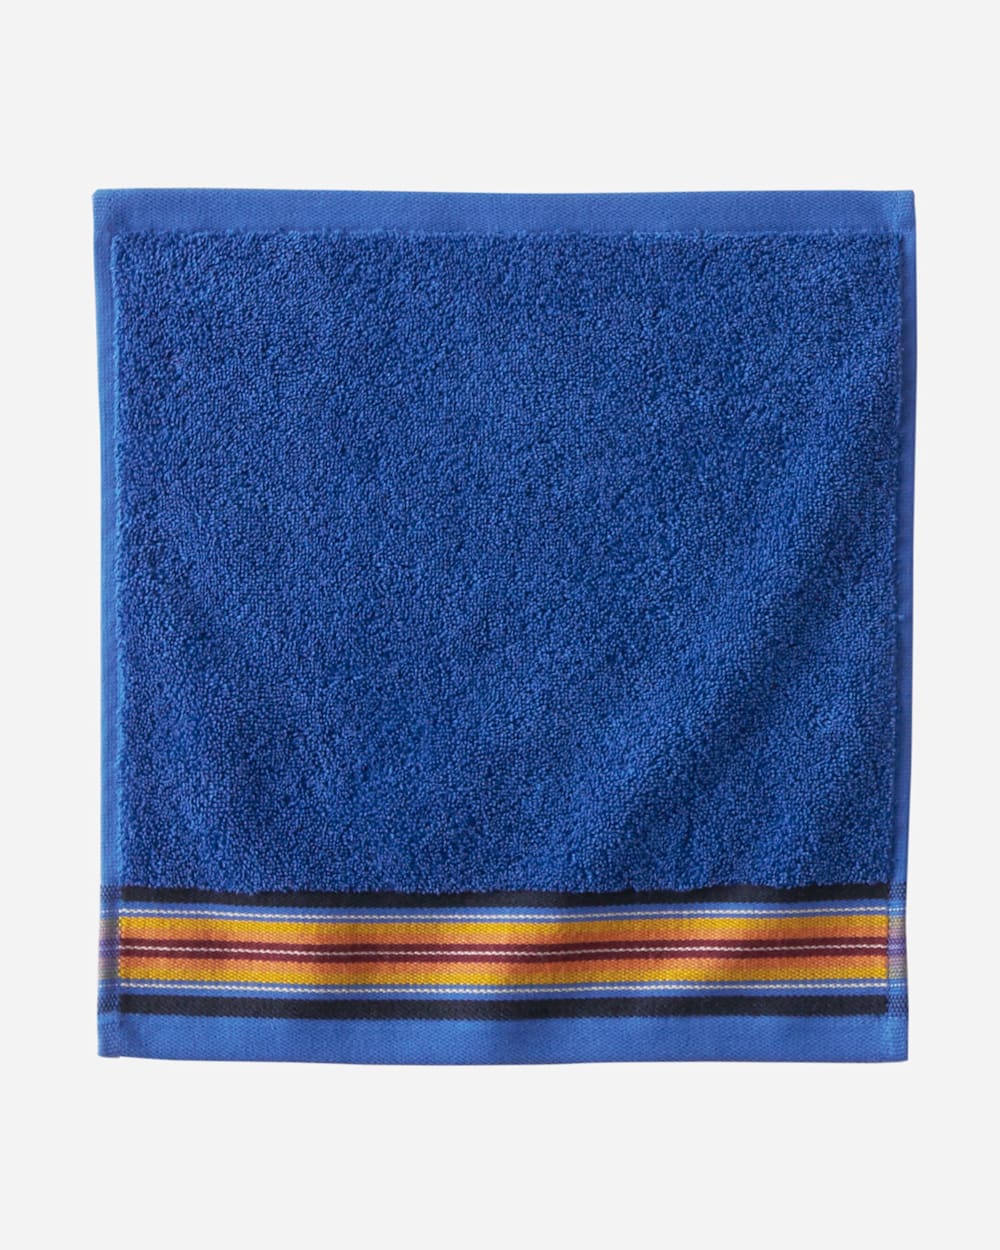 ALTERNATE VIEW OF SERAPE TOWEL SET IN BLUE image number 3